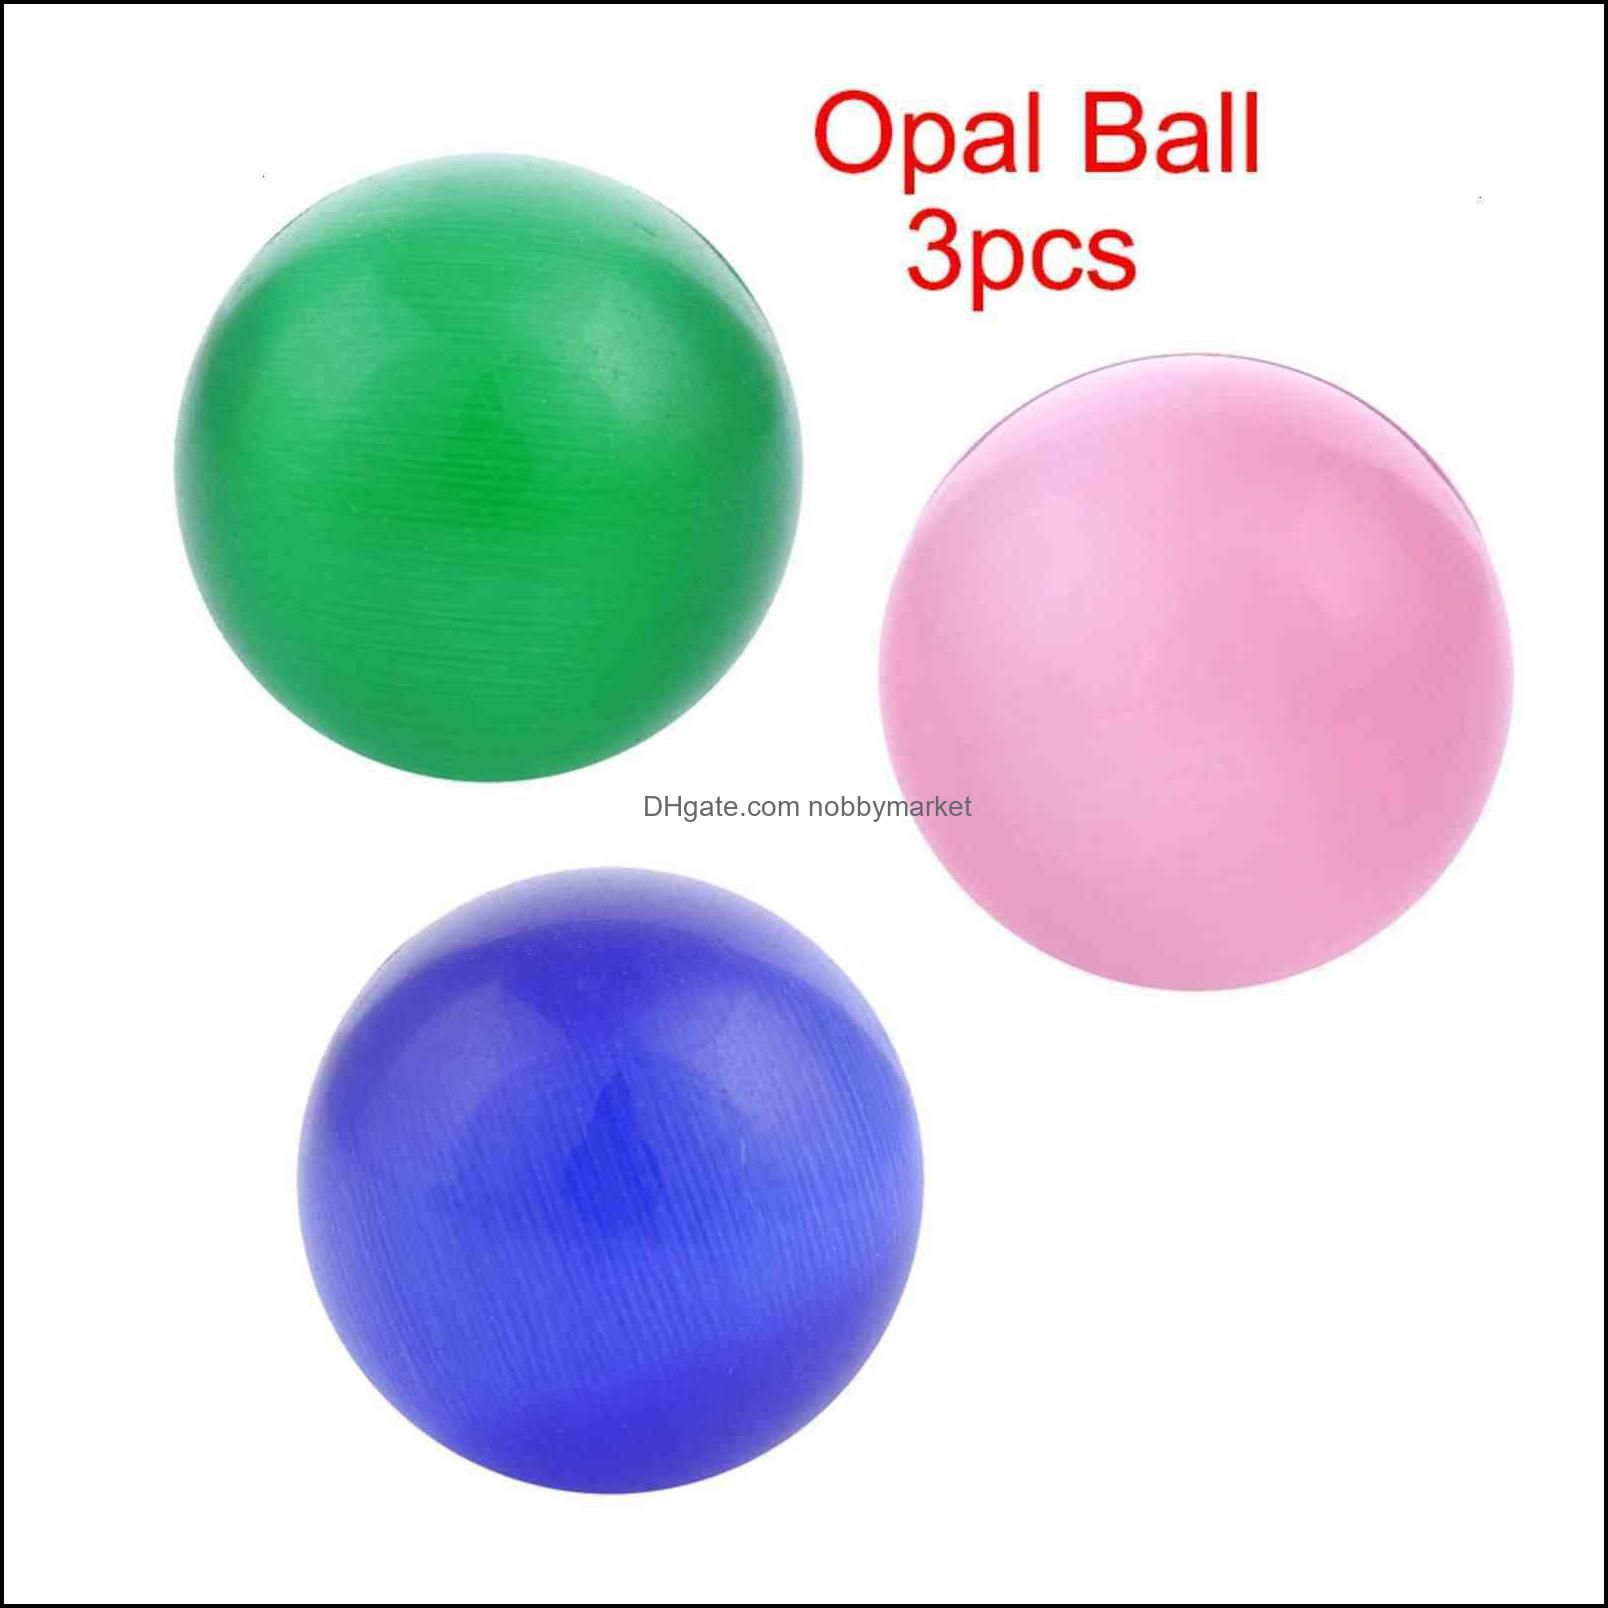 Opal Ball 3Pcs.